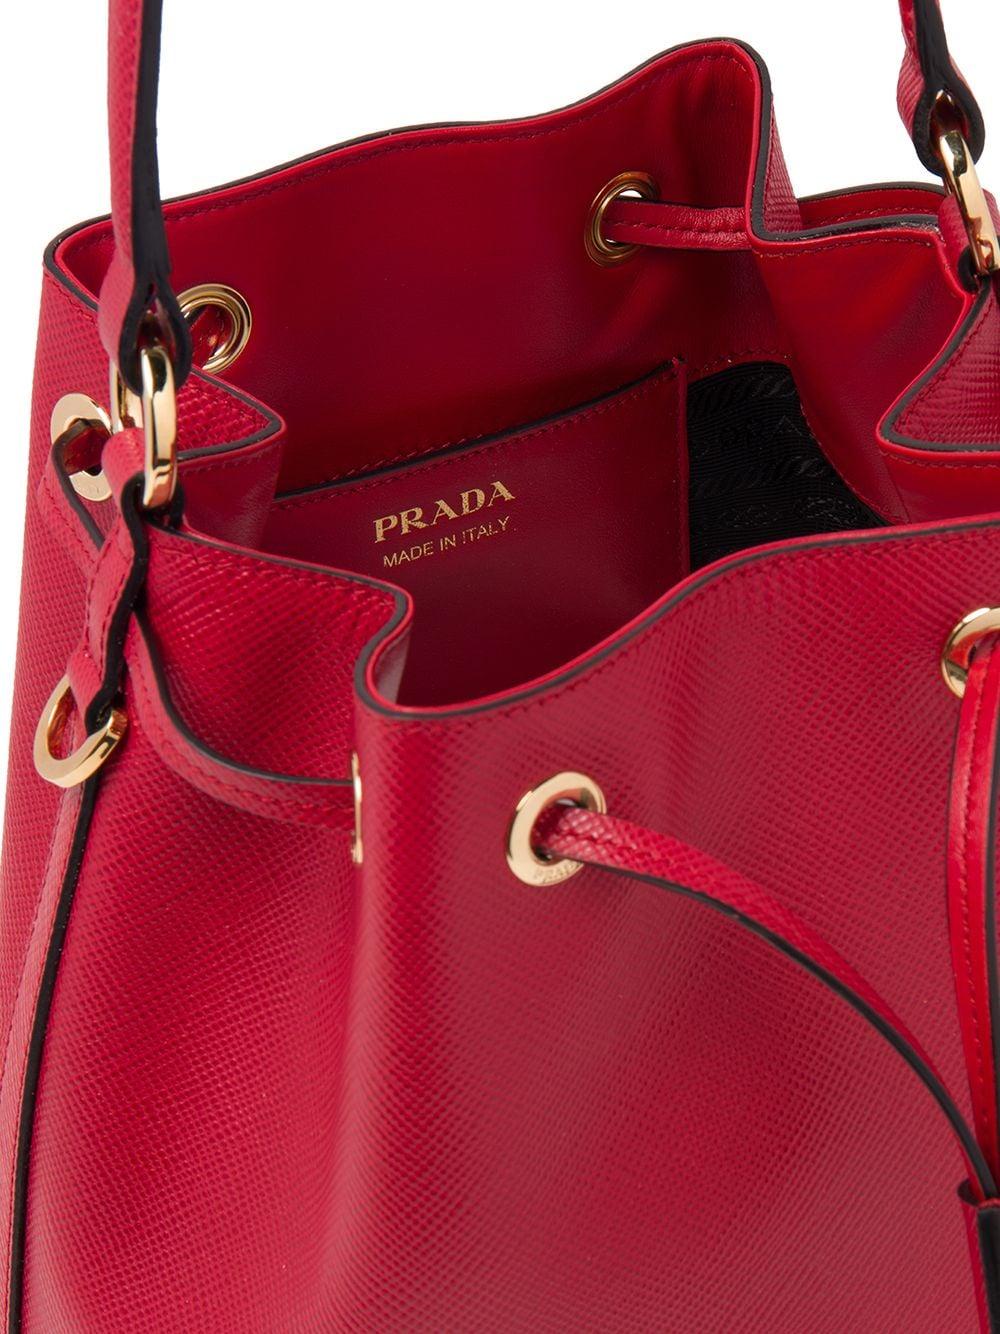 Prada Saffiano Leather Bucket Bag in Red